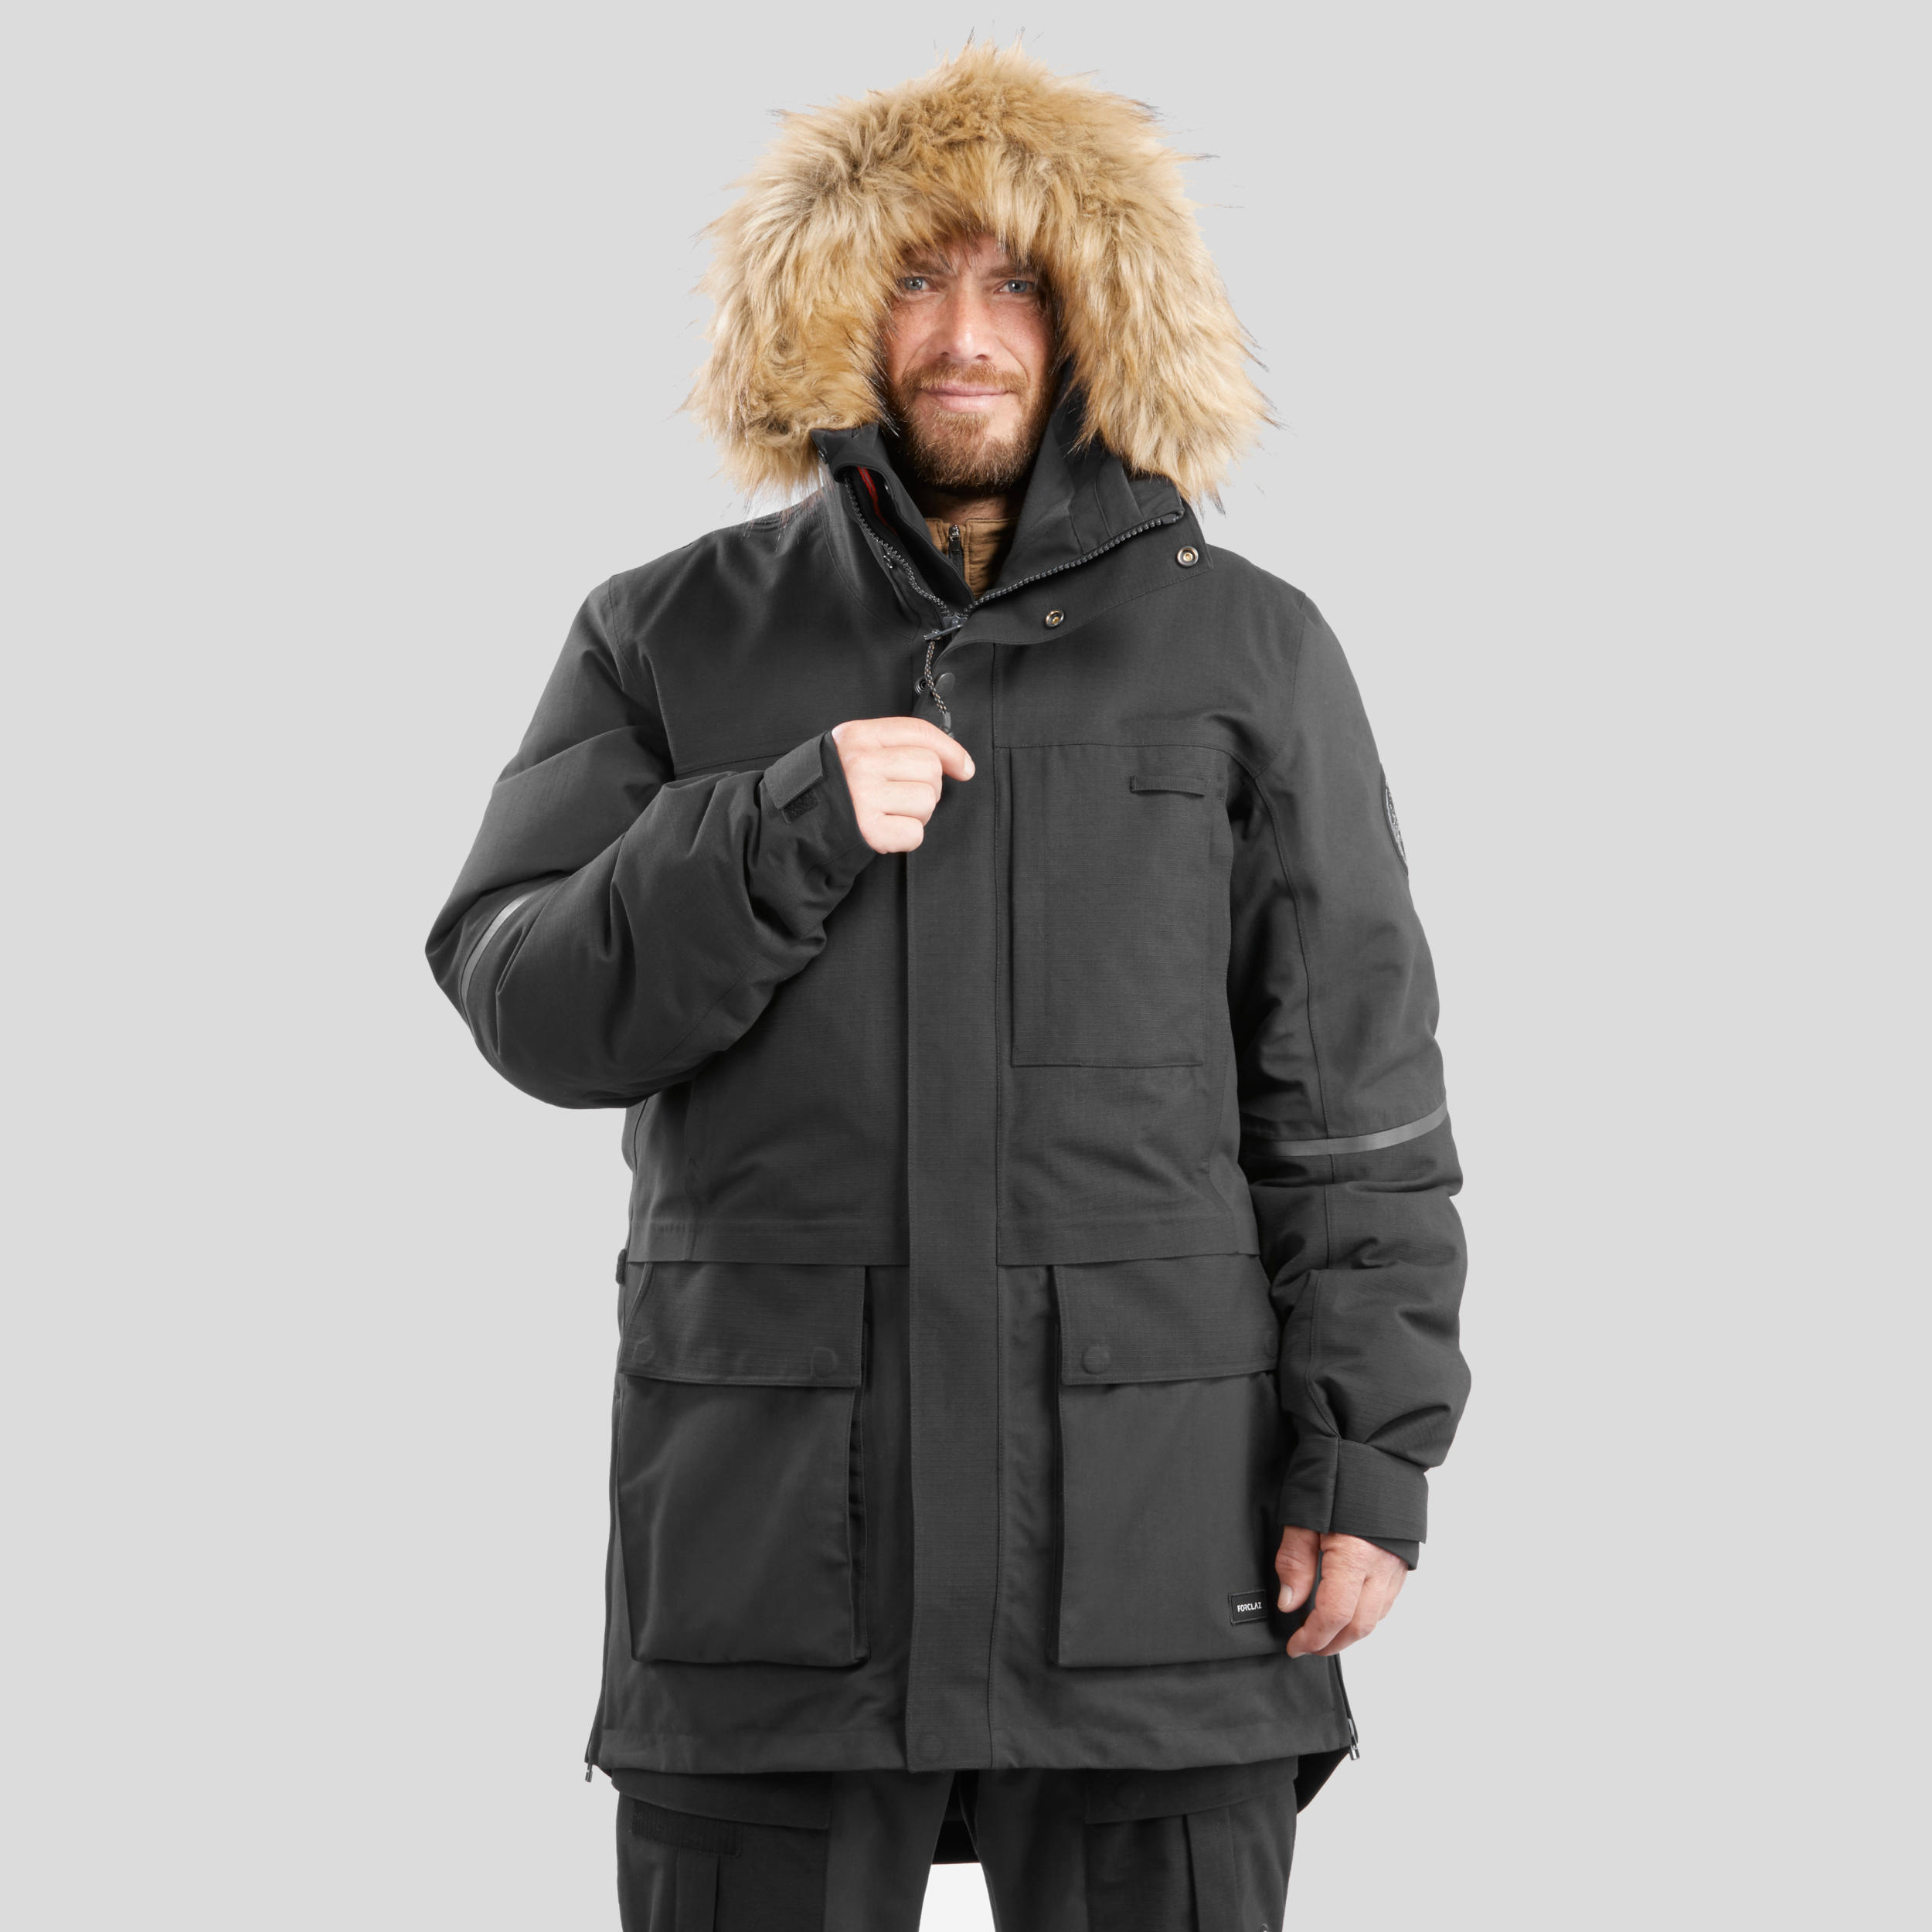 FORCLAZ Unisex waterproof parka jacket - 900 - Black